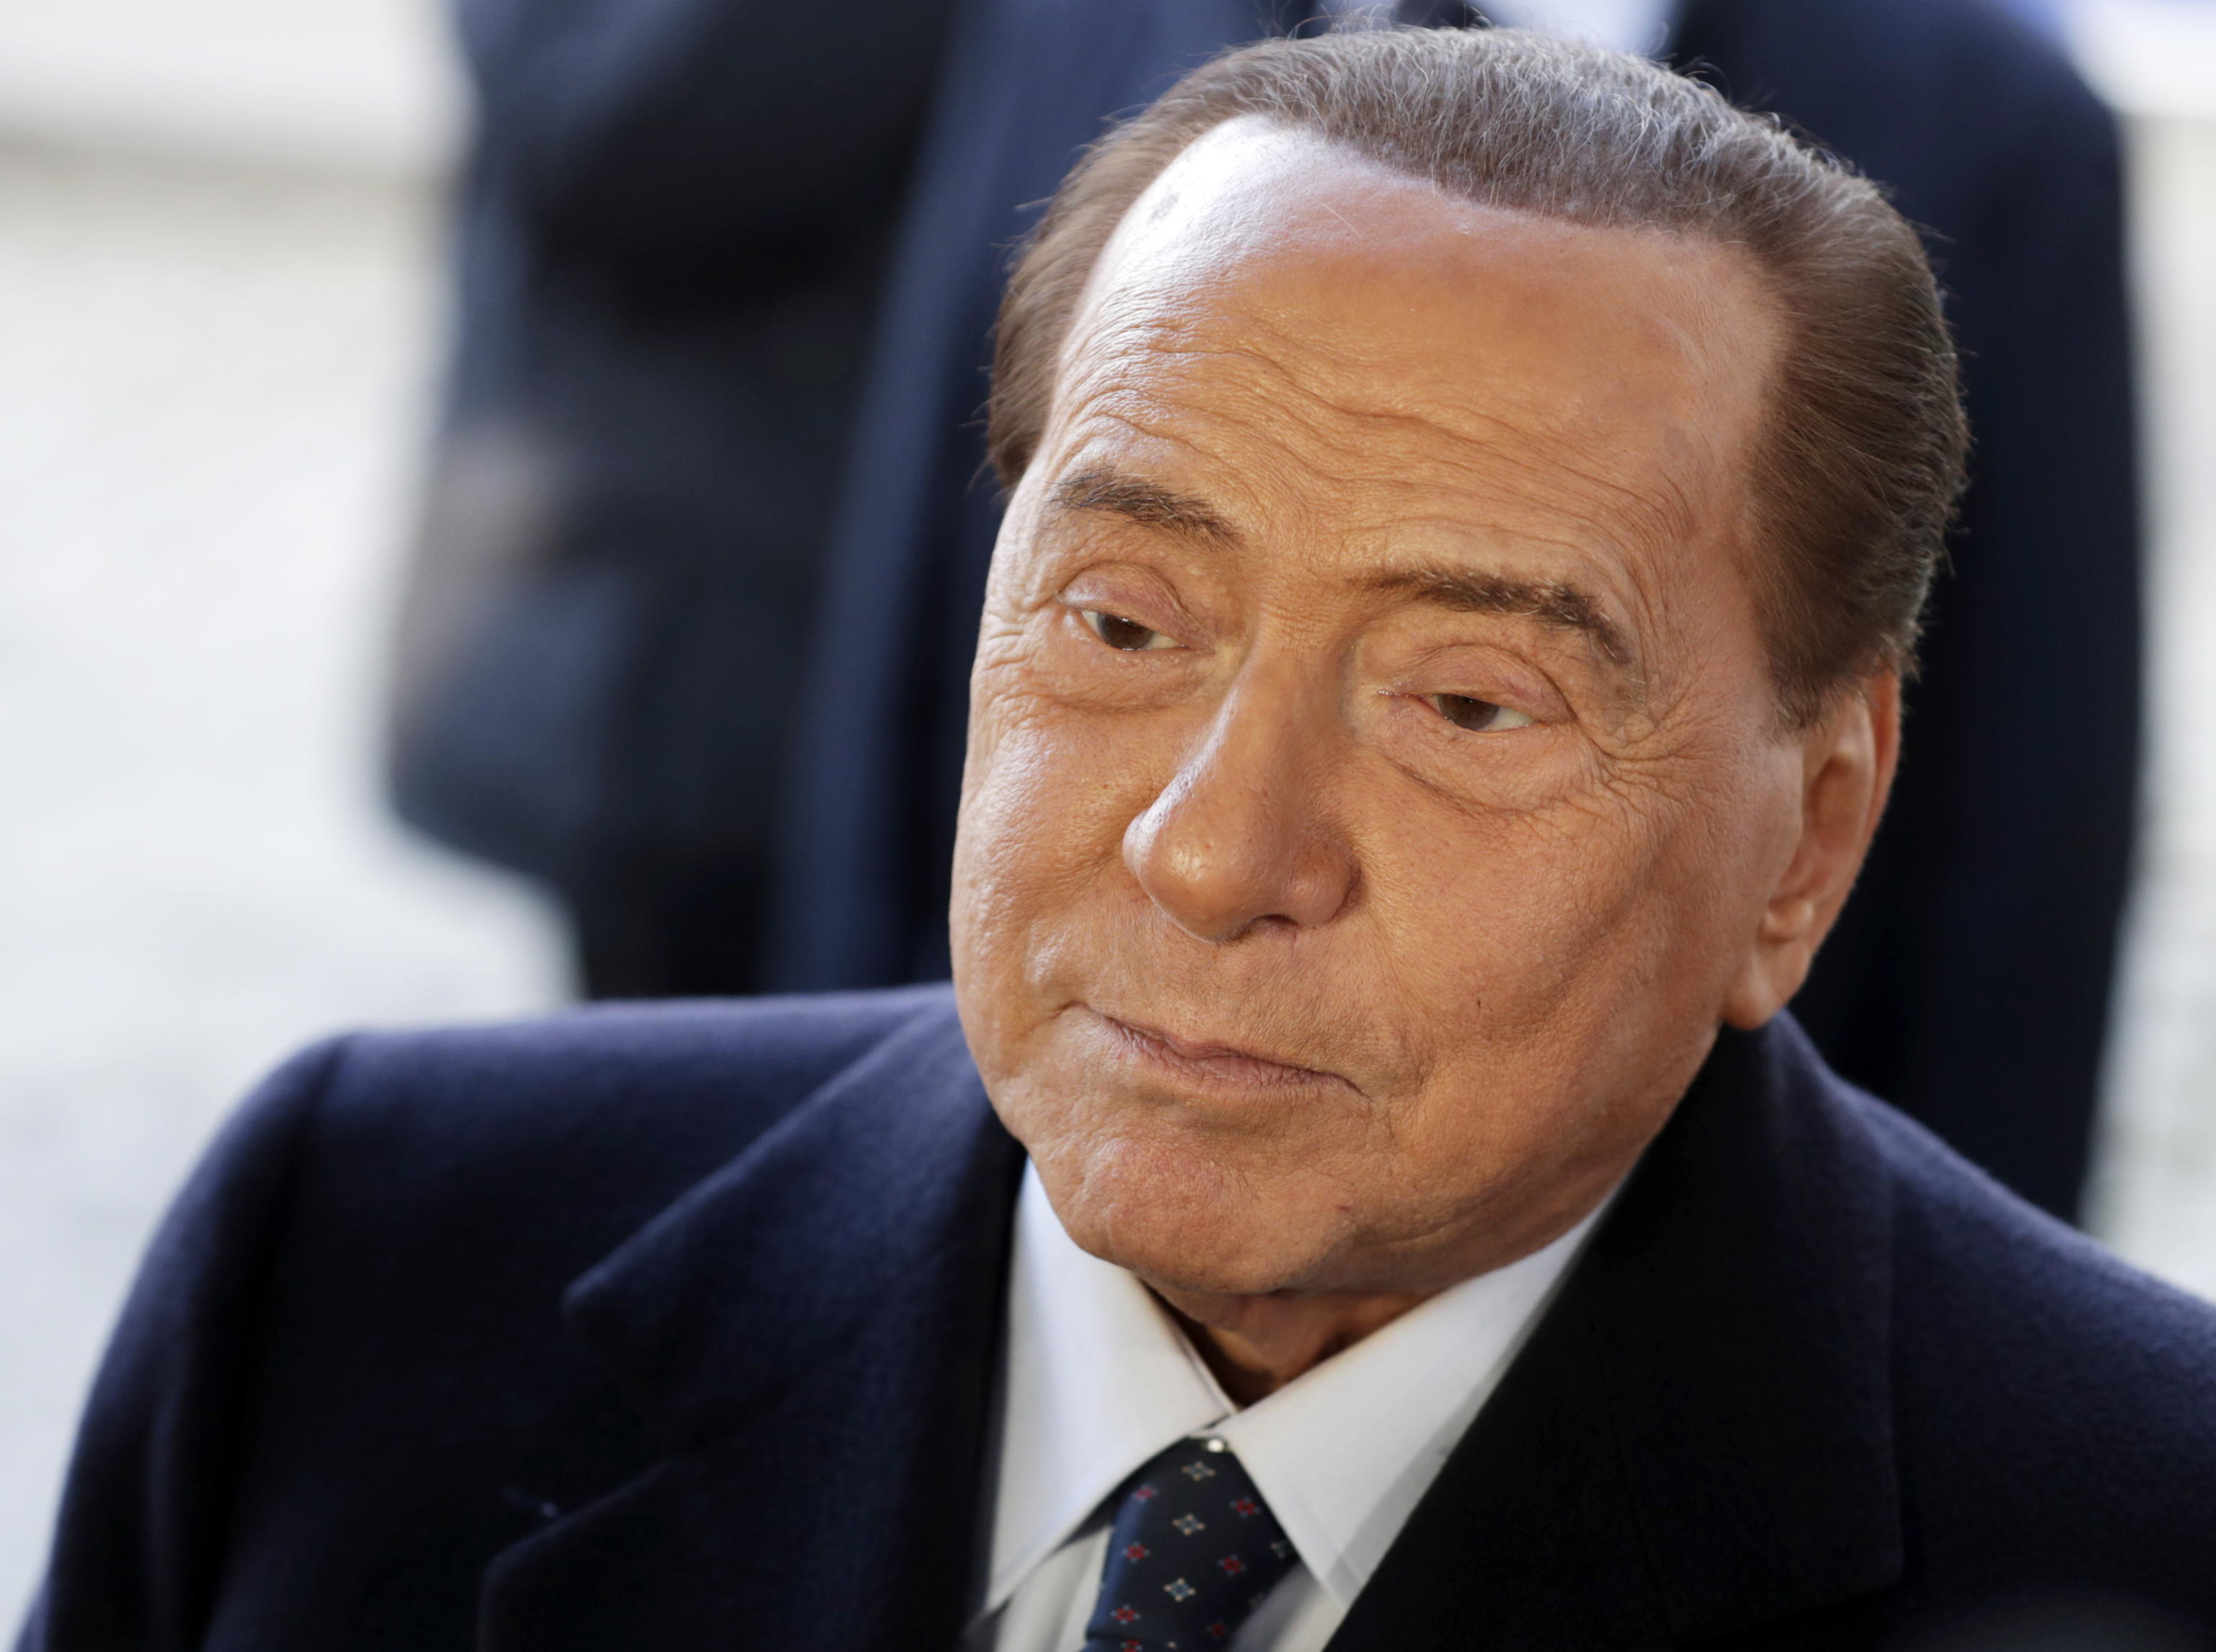 Имя берлускони 7 букв. Сильвио Берлускони. Берлускони 2021. Премьер-министр Италии Сильвио Берлускони. Сильвио Берлускони 2021 год.